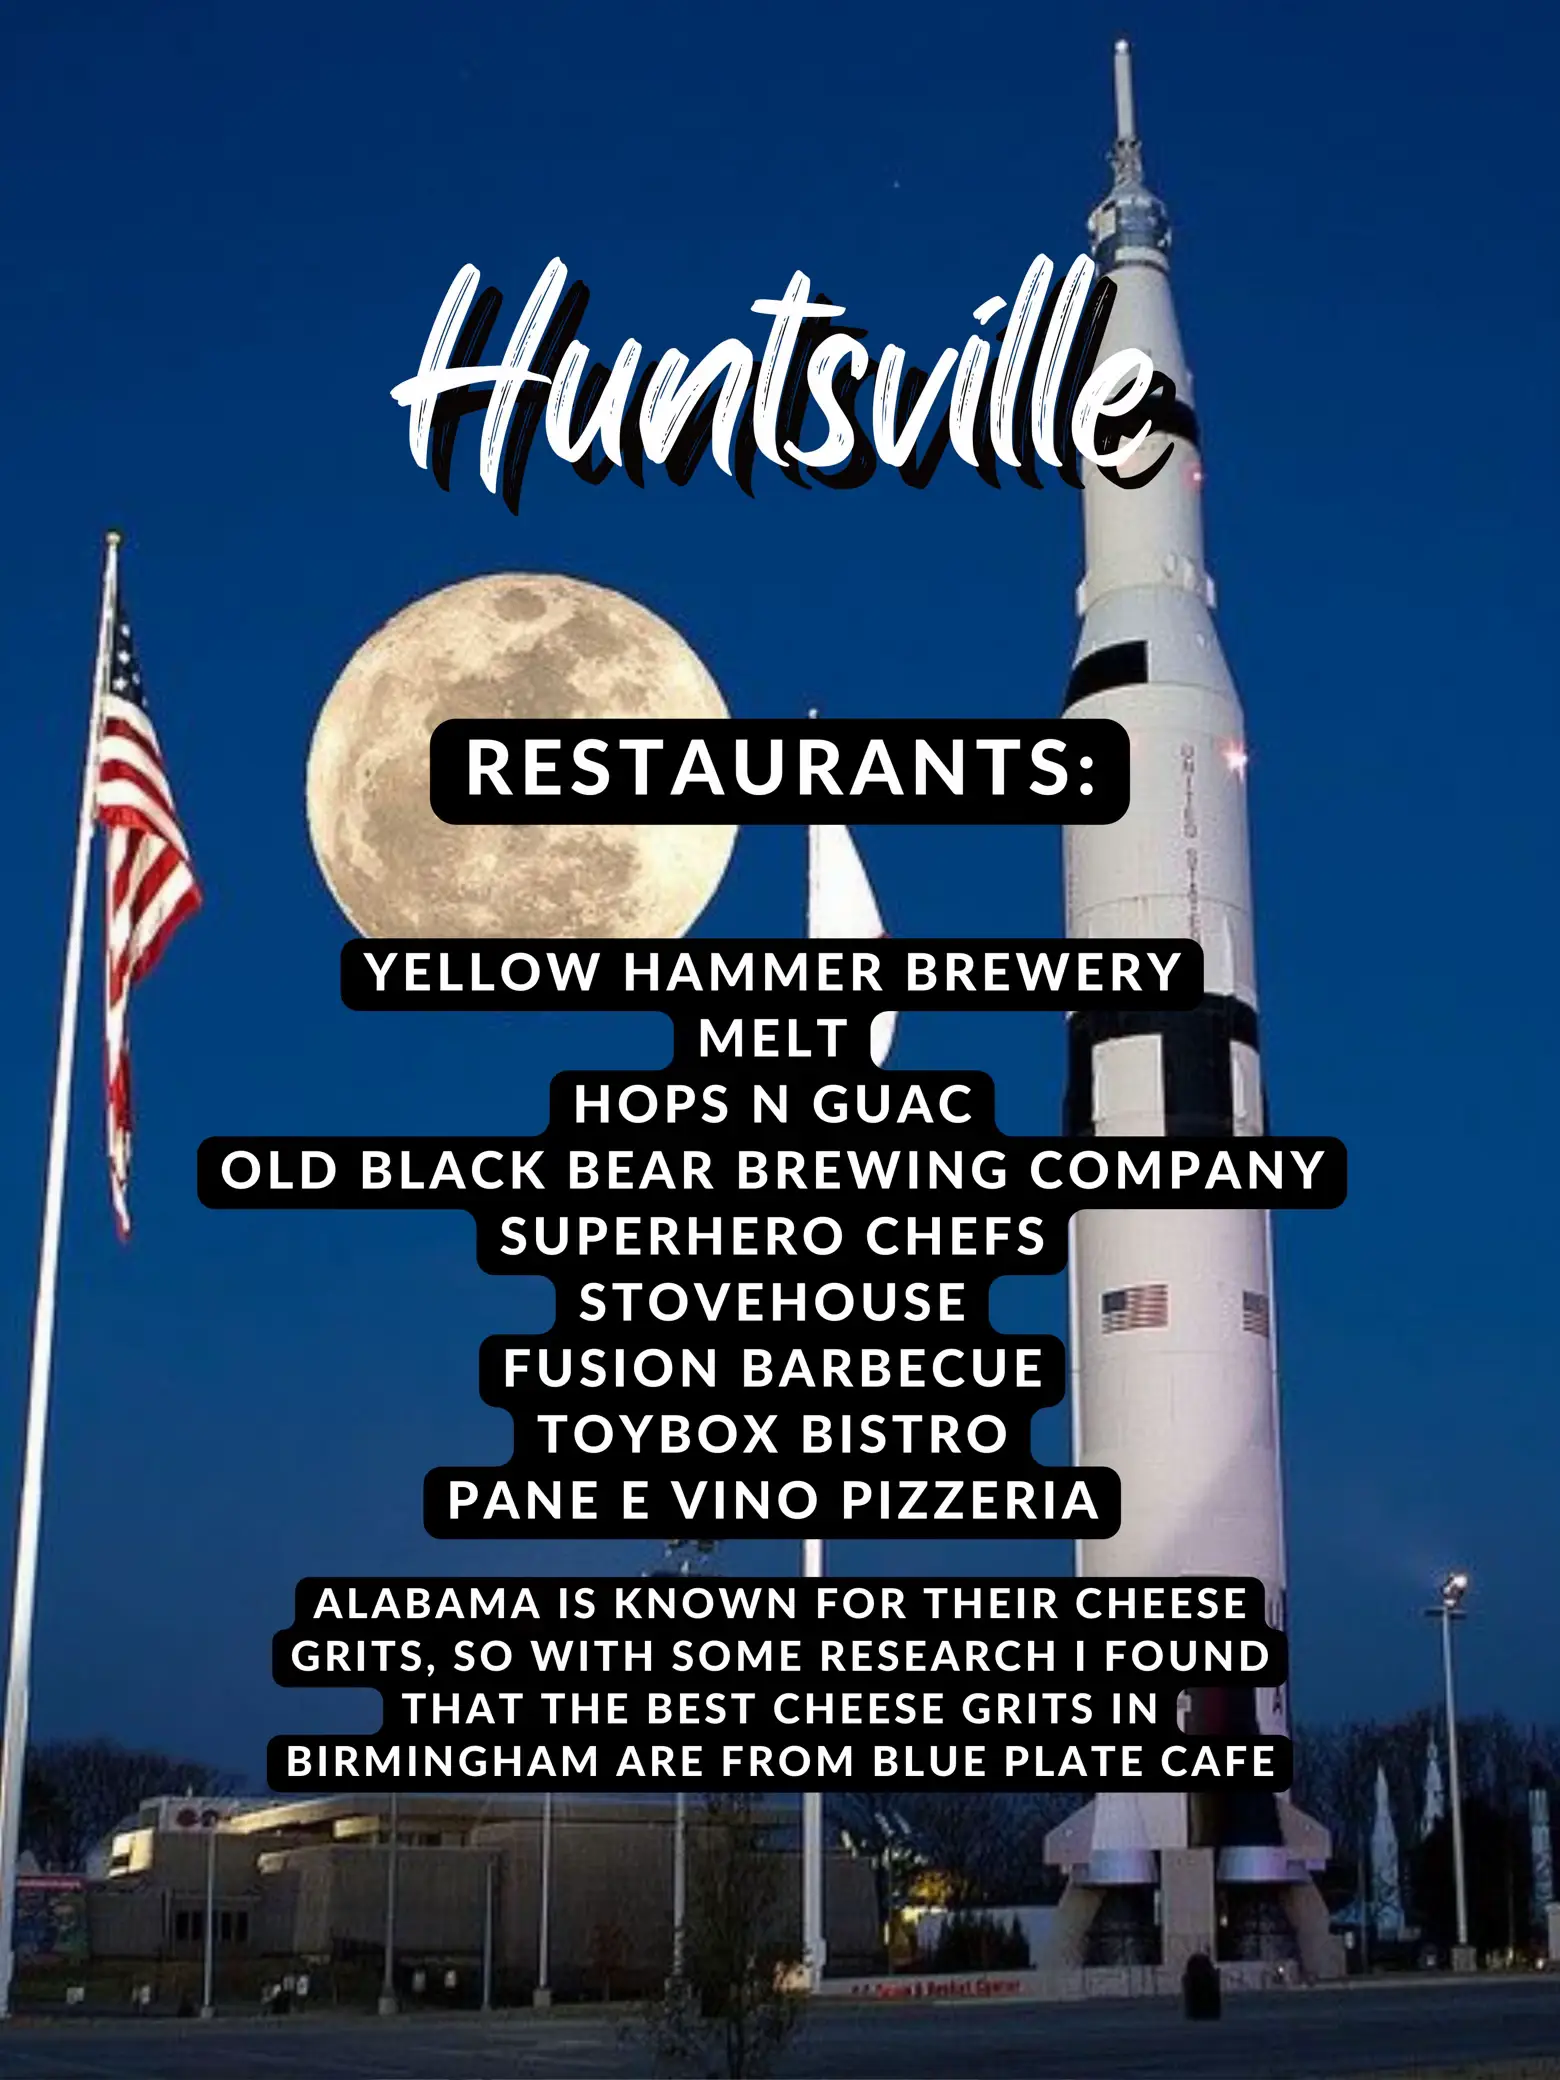  A list of restaurants in Huntsville, Al.